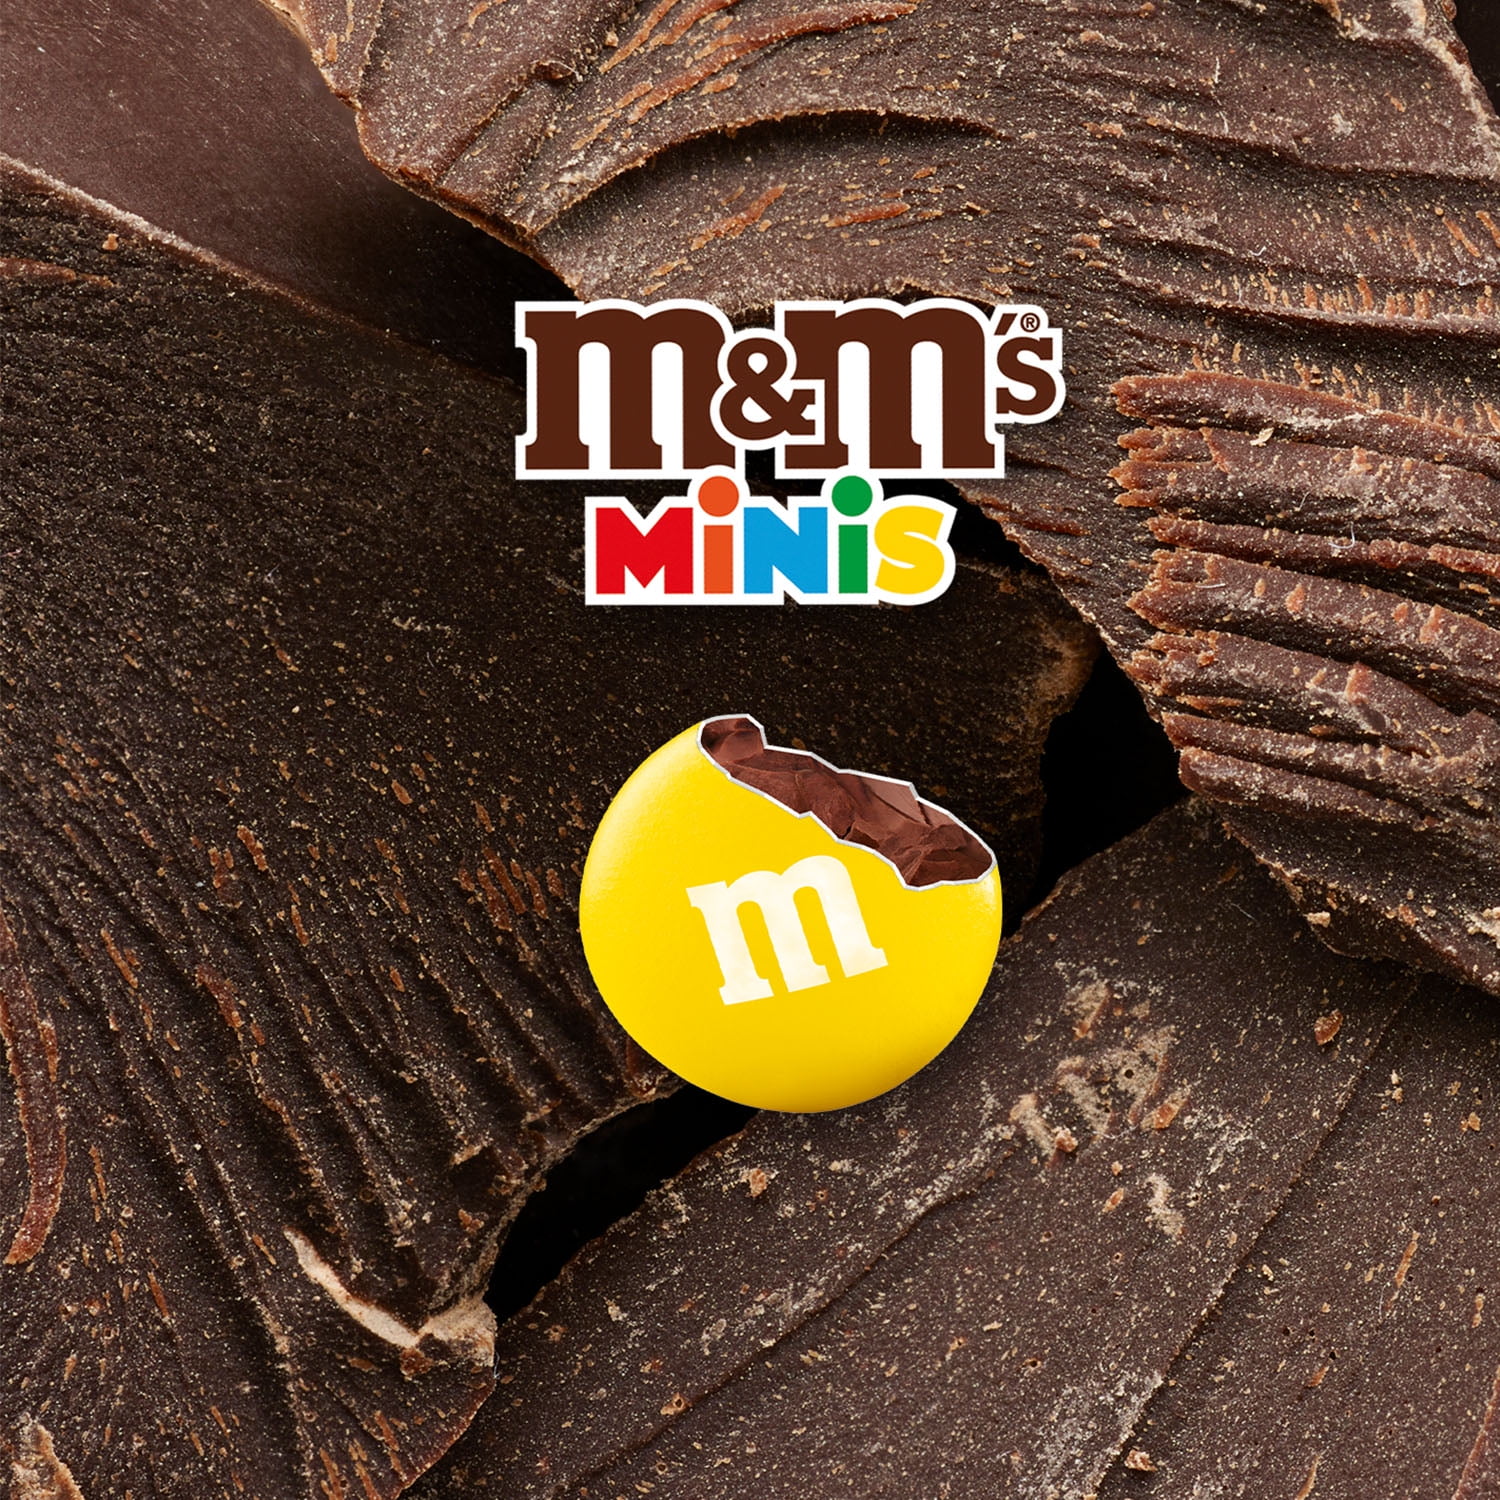 Mars M&M's Fun Size Peanut Milk Chocolate Candies, 11.23 Oz.